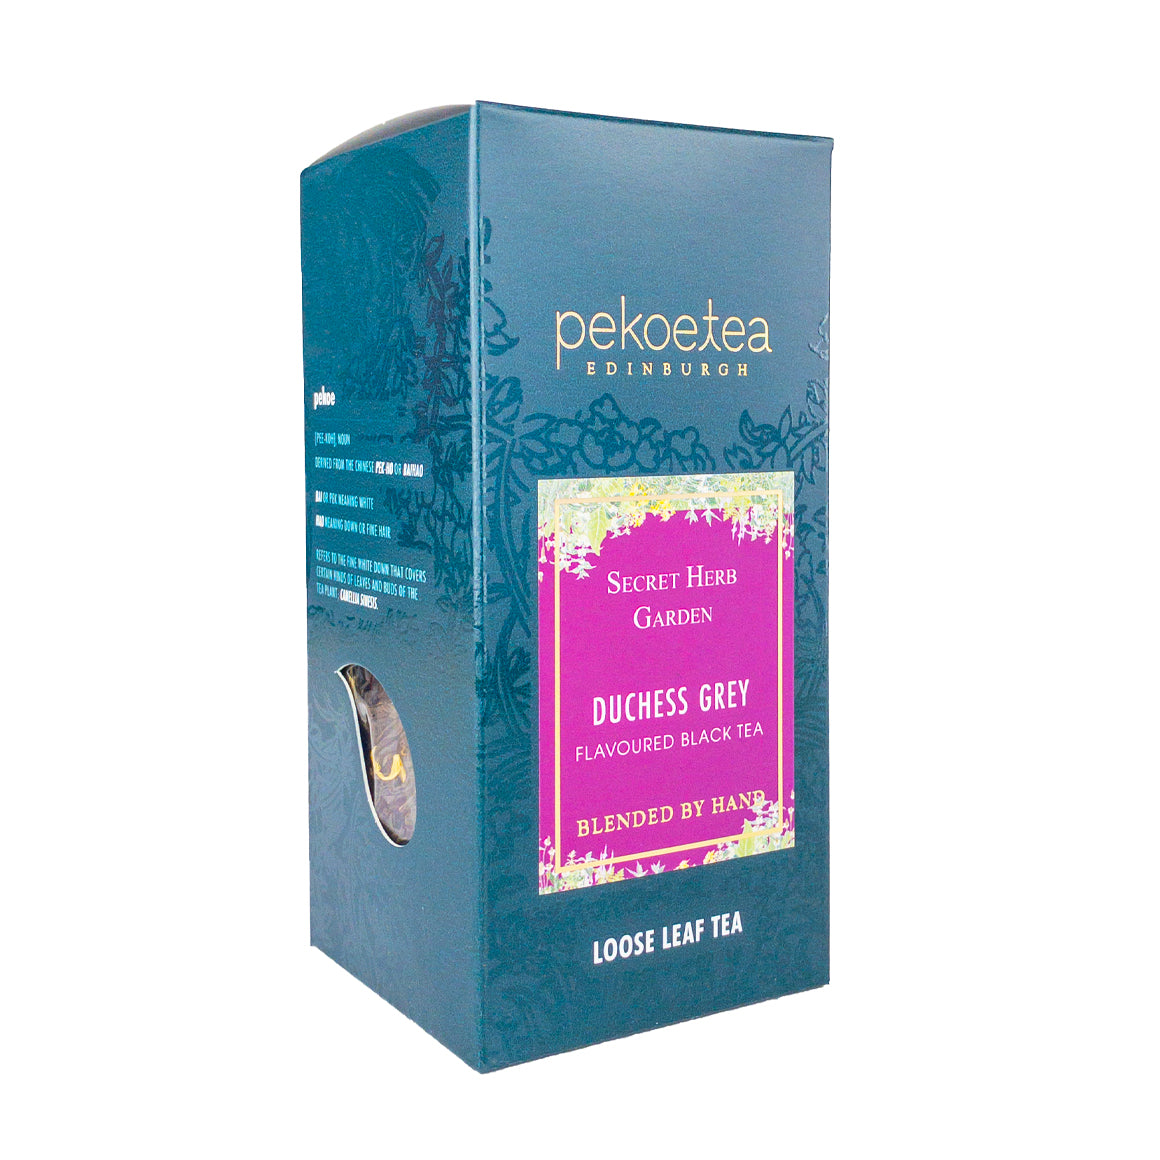 PekoeTea Edinburgh Secret Herb Garden Duchess Grey Hand Blended Flavoured Loose Leaf Tea Box